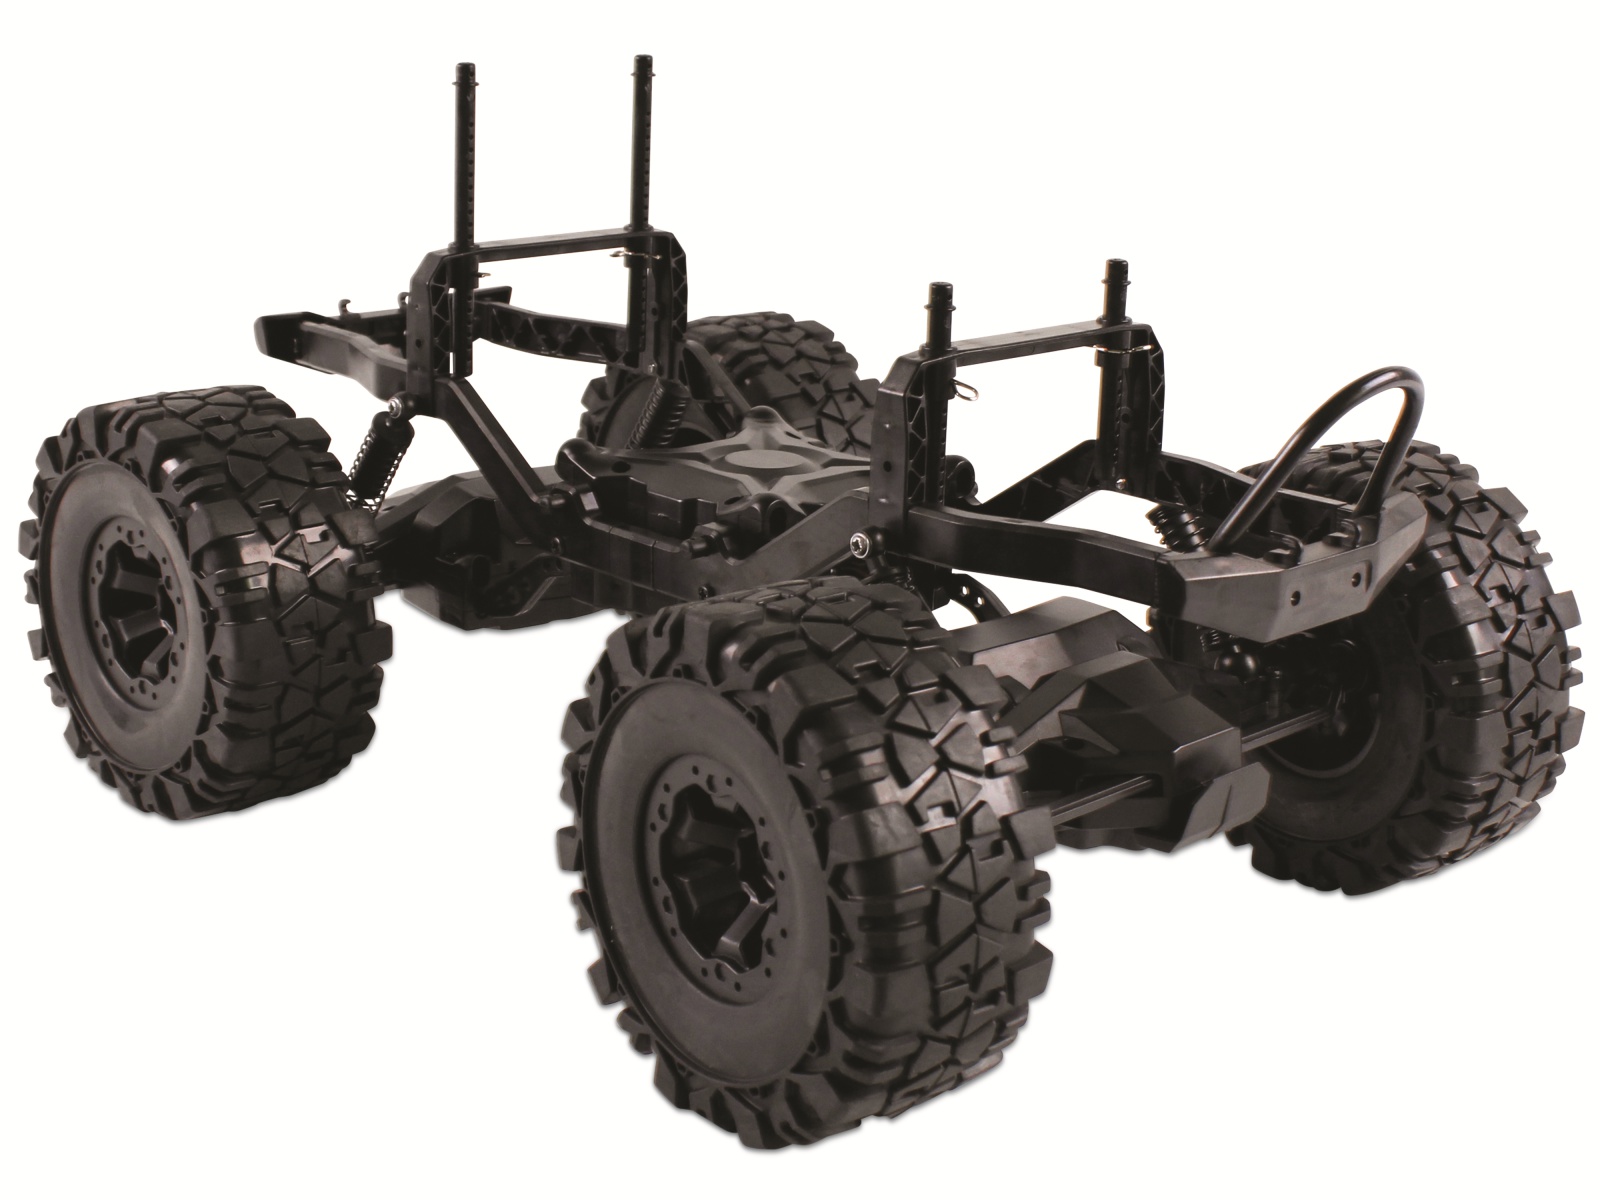 df models DF Crawler Pick Up, 1:10, 4WD, RTR, 3096